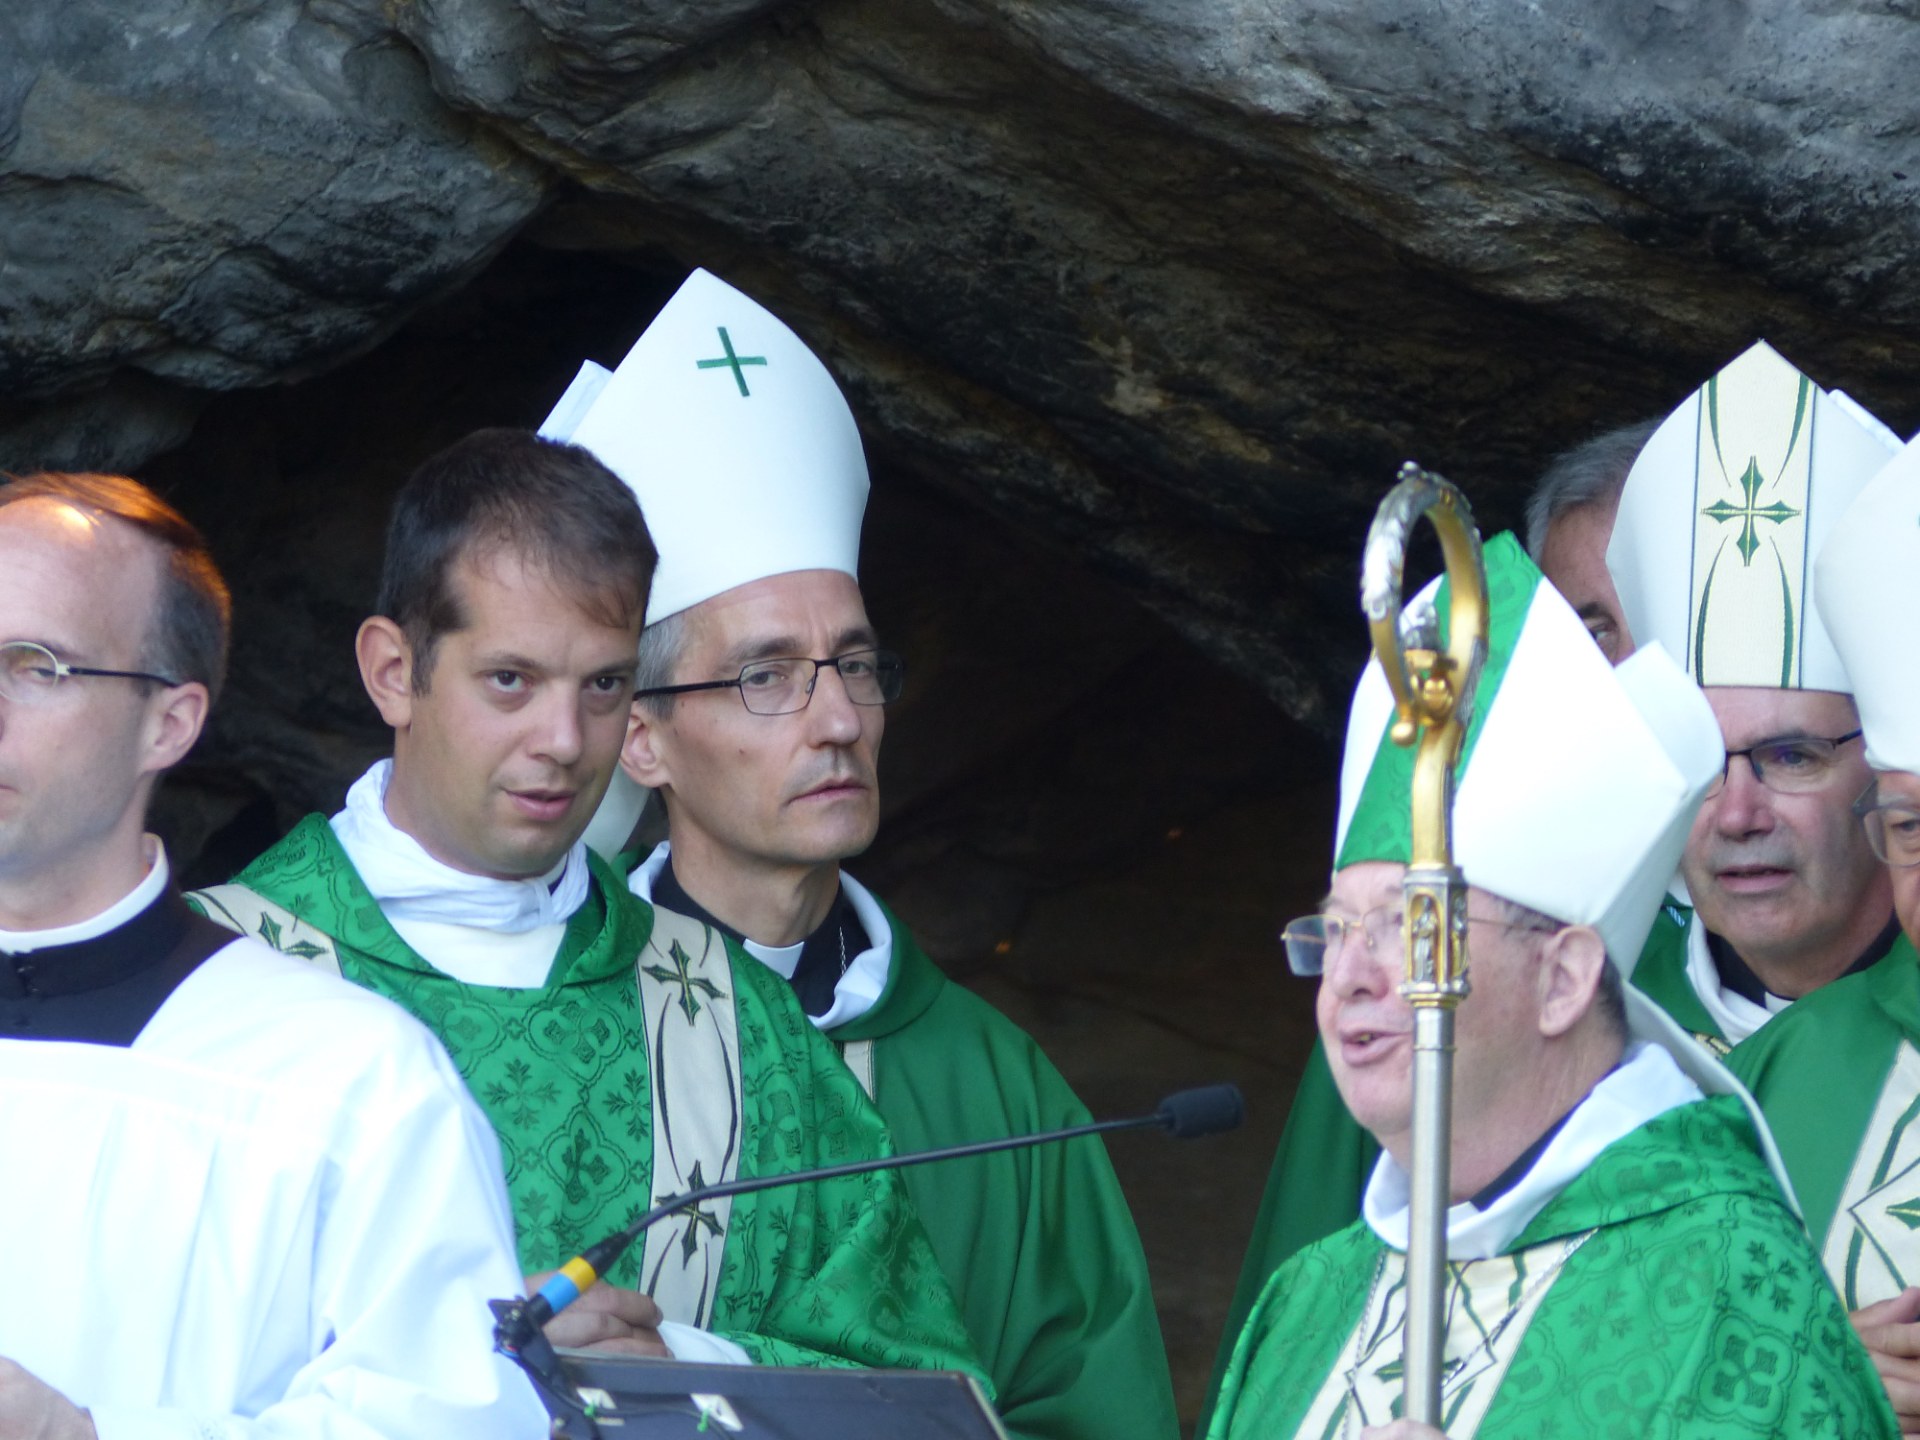 Lourdes2018-photos Angelus dimanche (13)